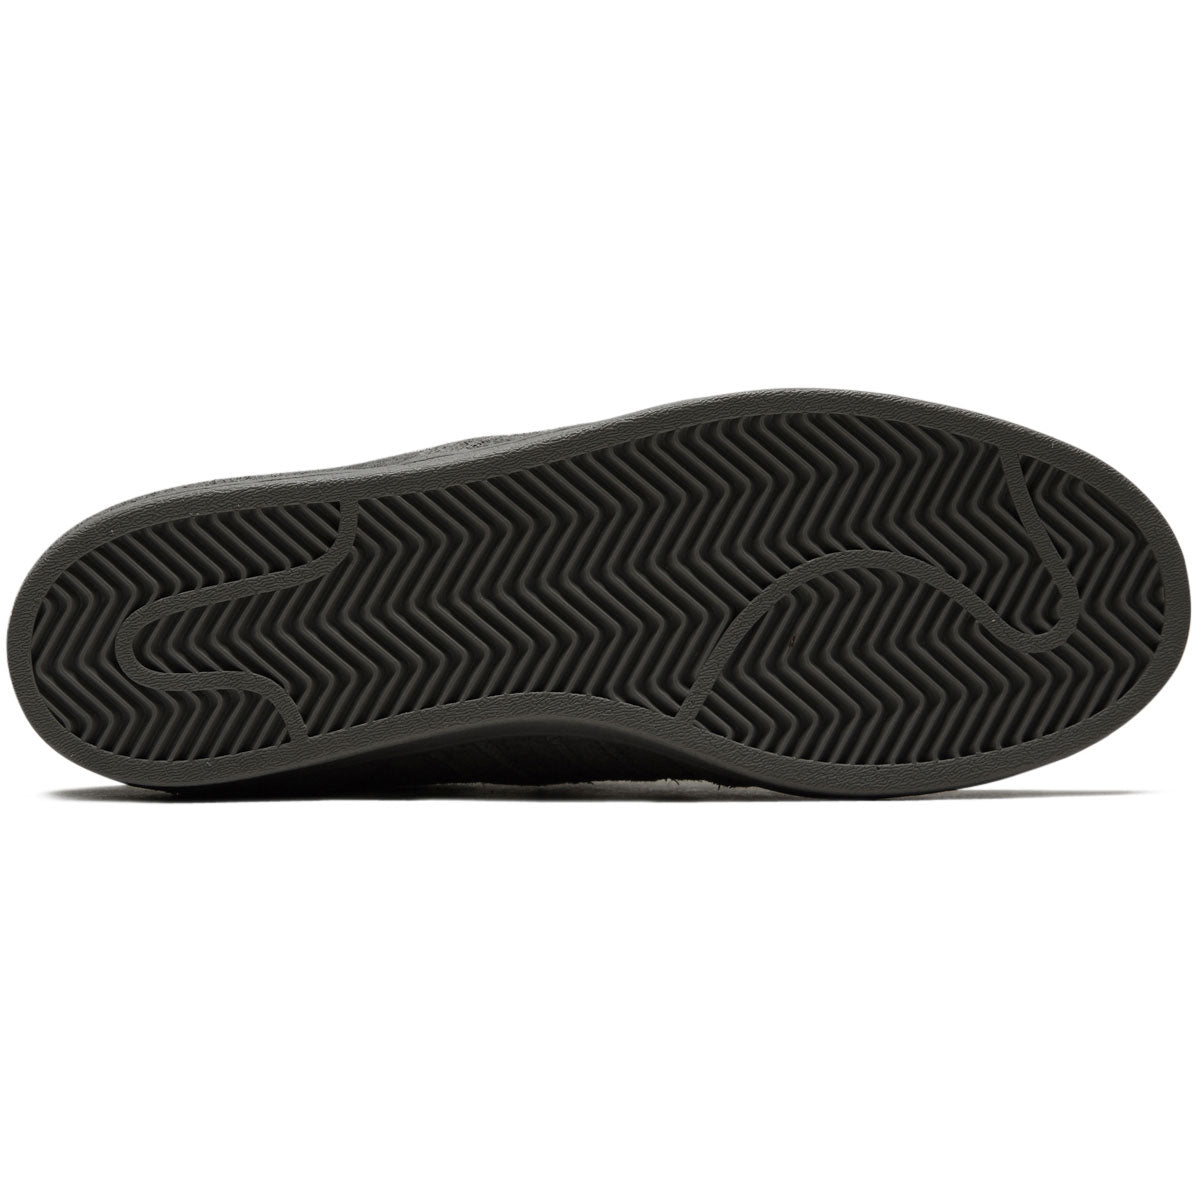 Adidas Superstar ADV Shoes - Grey/Grey/Core Black